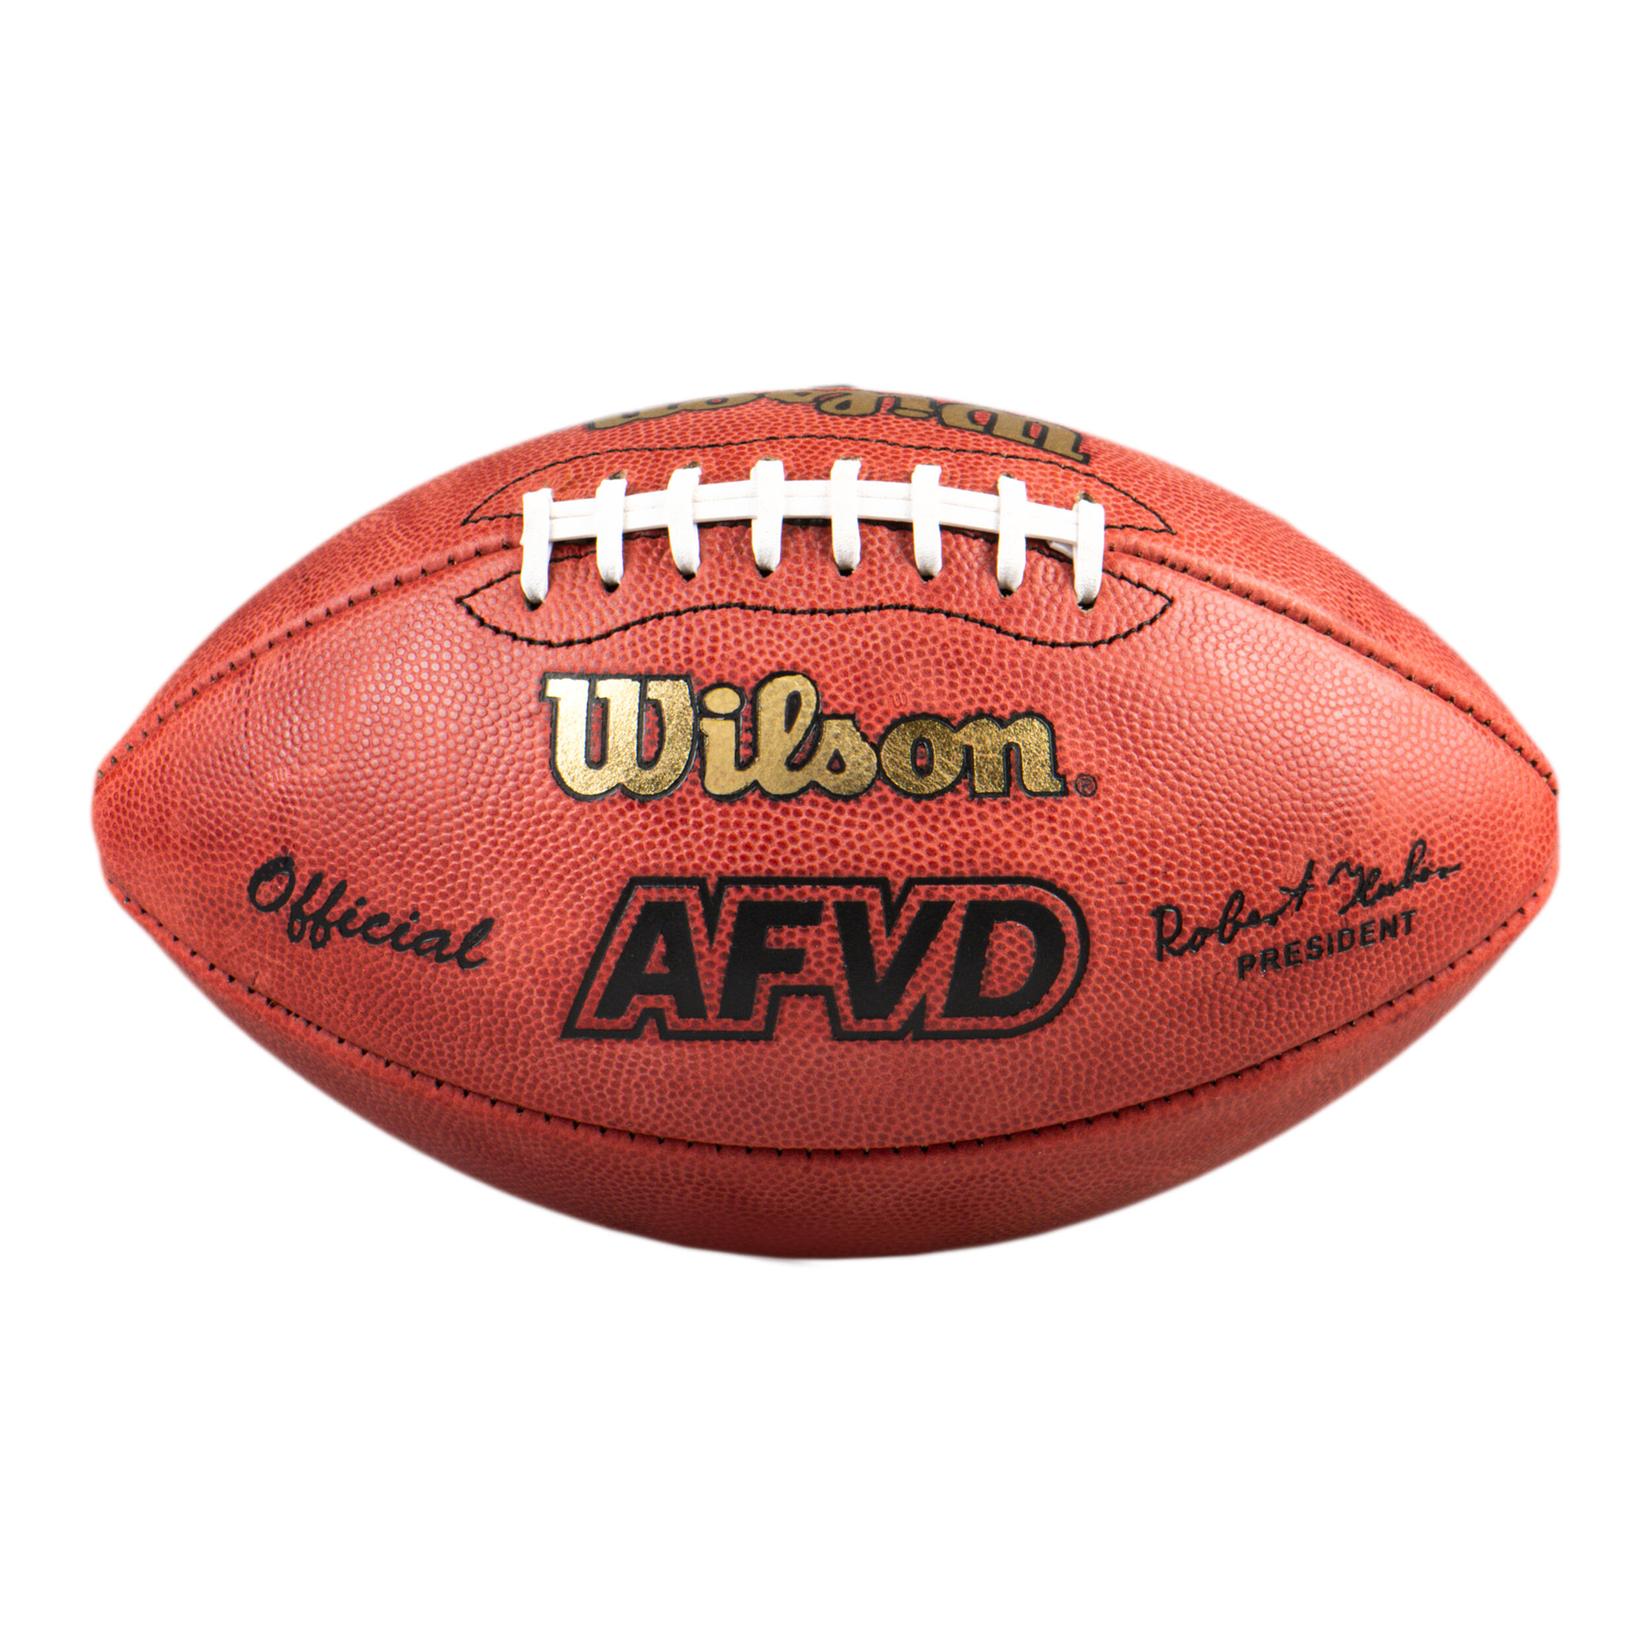 American Football Ball offizielle Grösse - AFVD Game Ball WTF1000 braun für 169,99€ in Decathlon